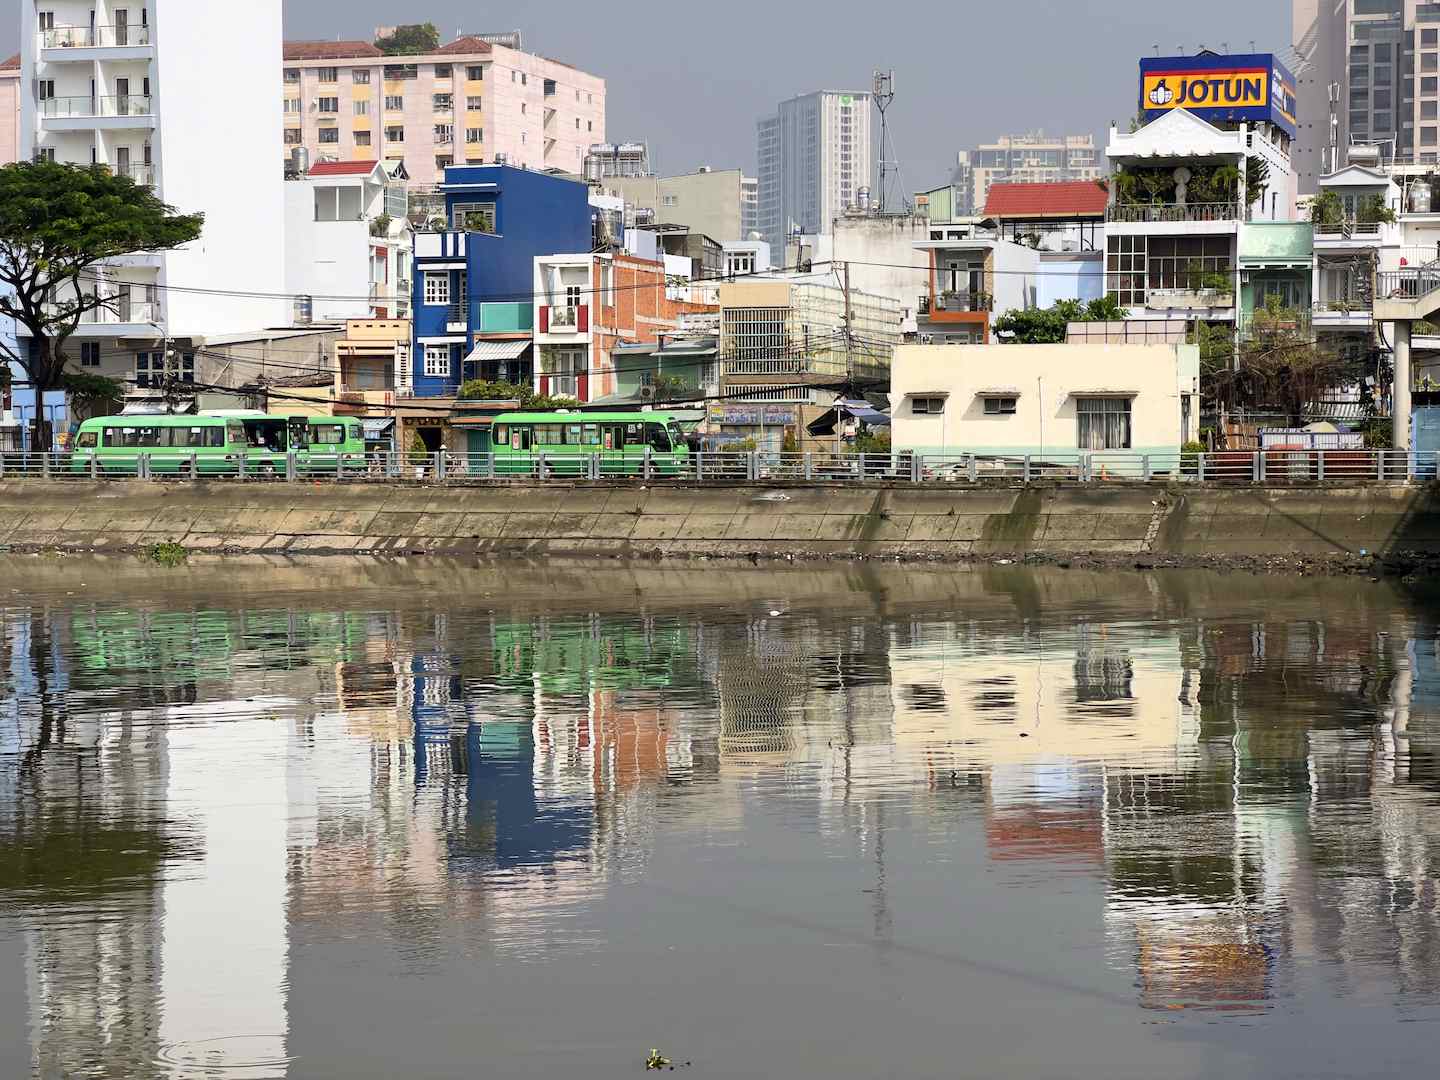 A riverside street in Ho Chi Minh city, Vietnam